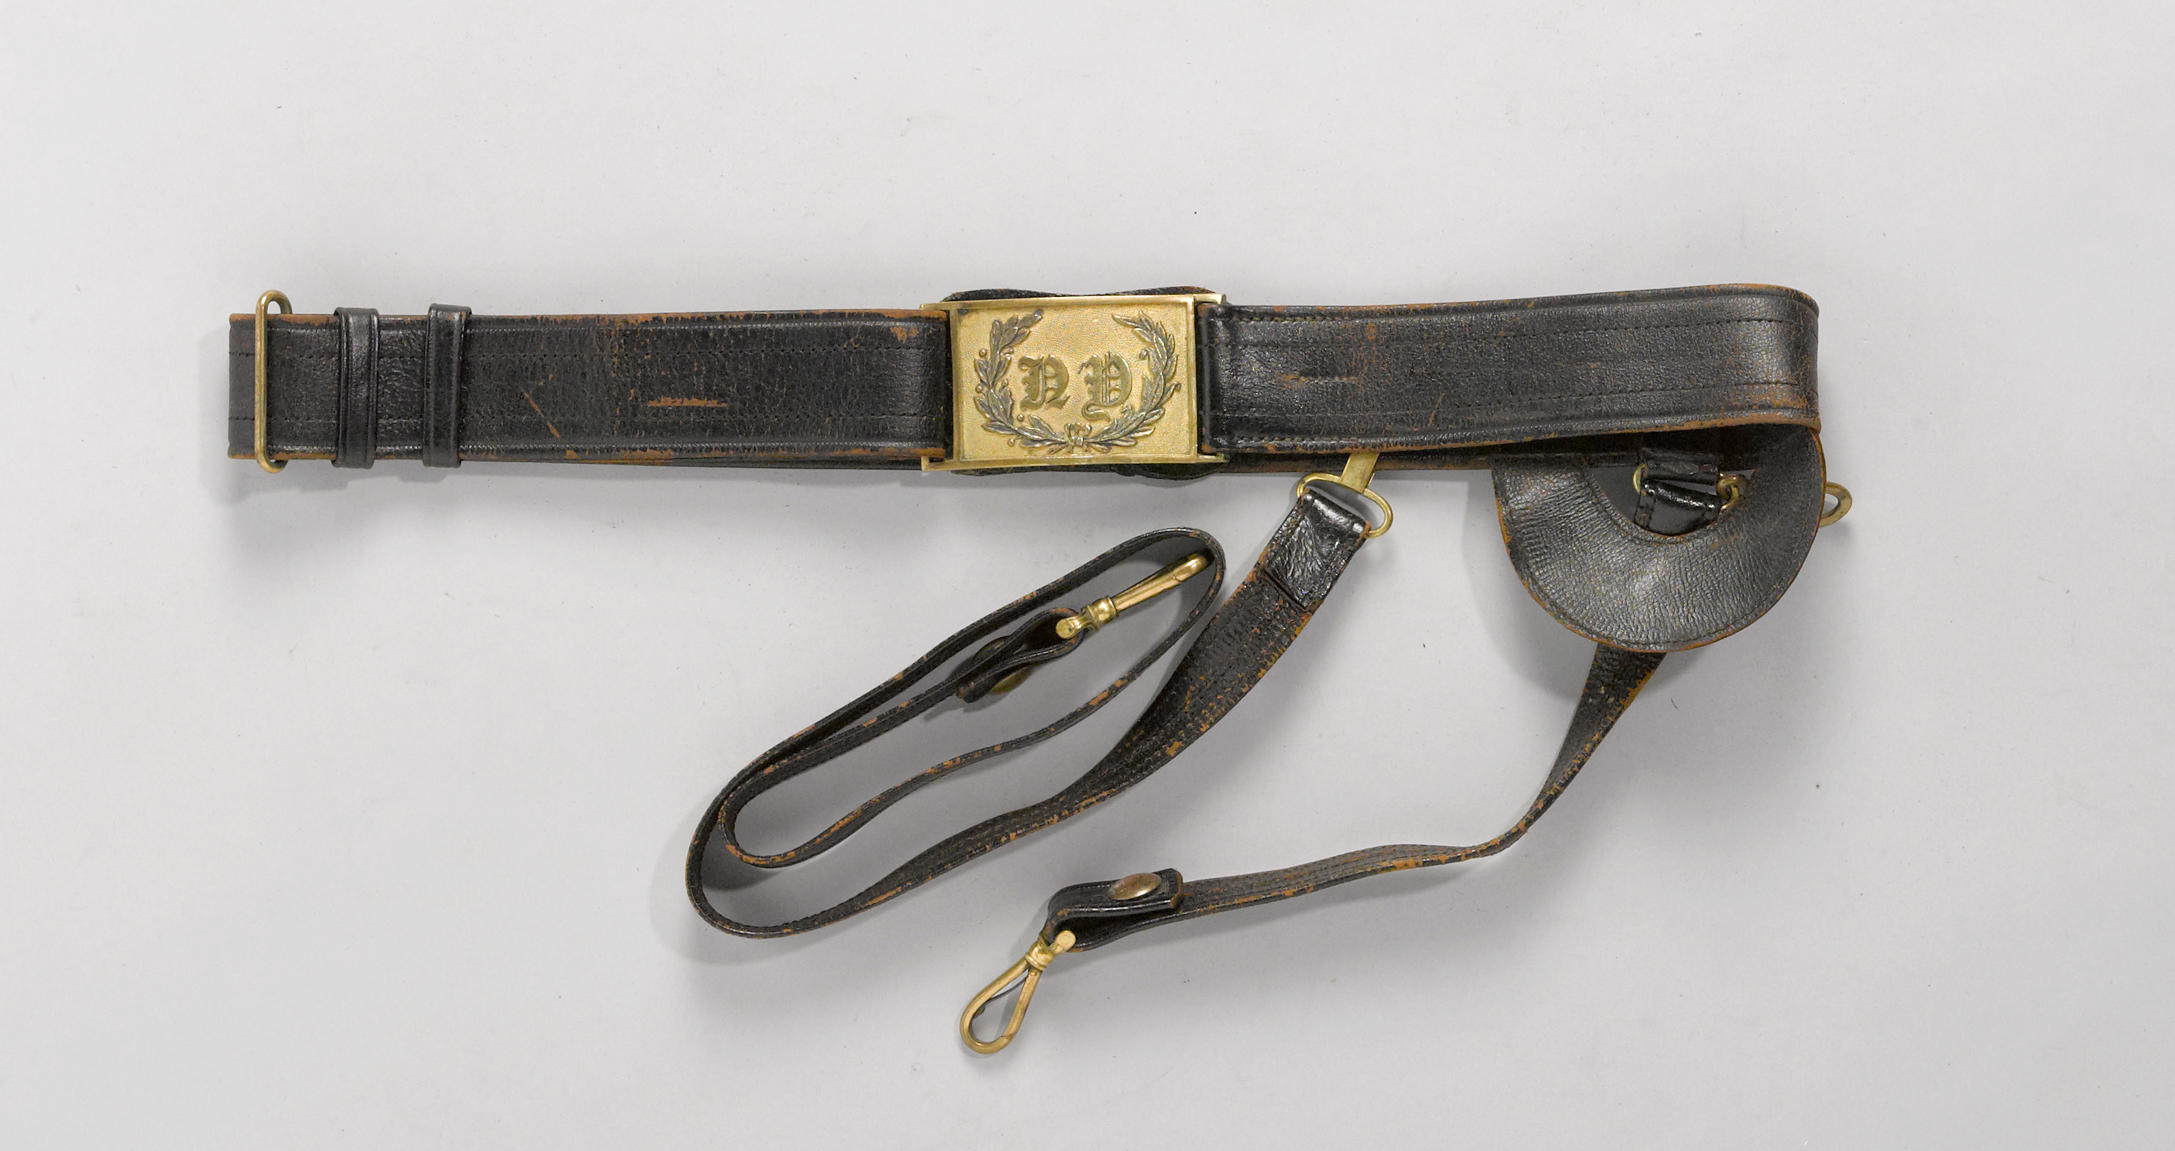 A Civil War era New York 1851 pattern militia officer's sword belt